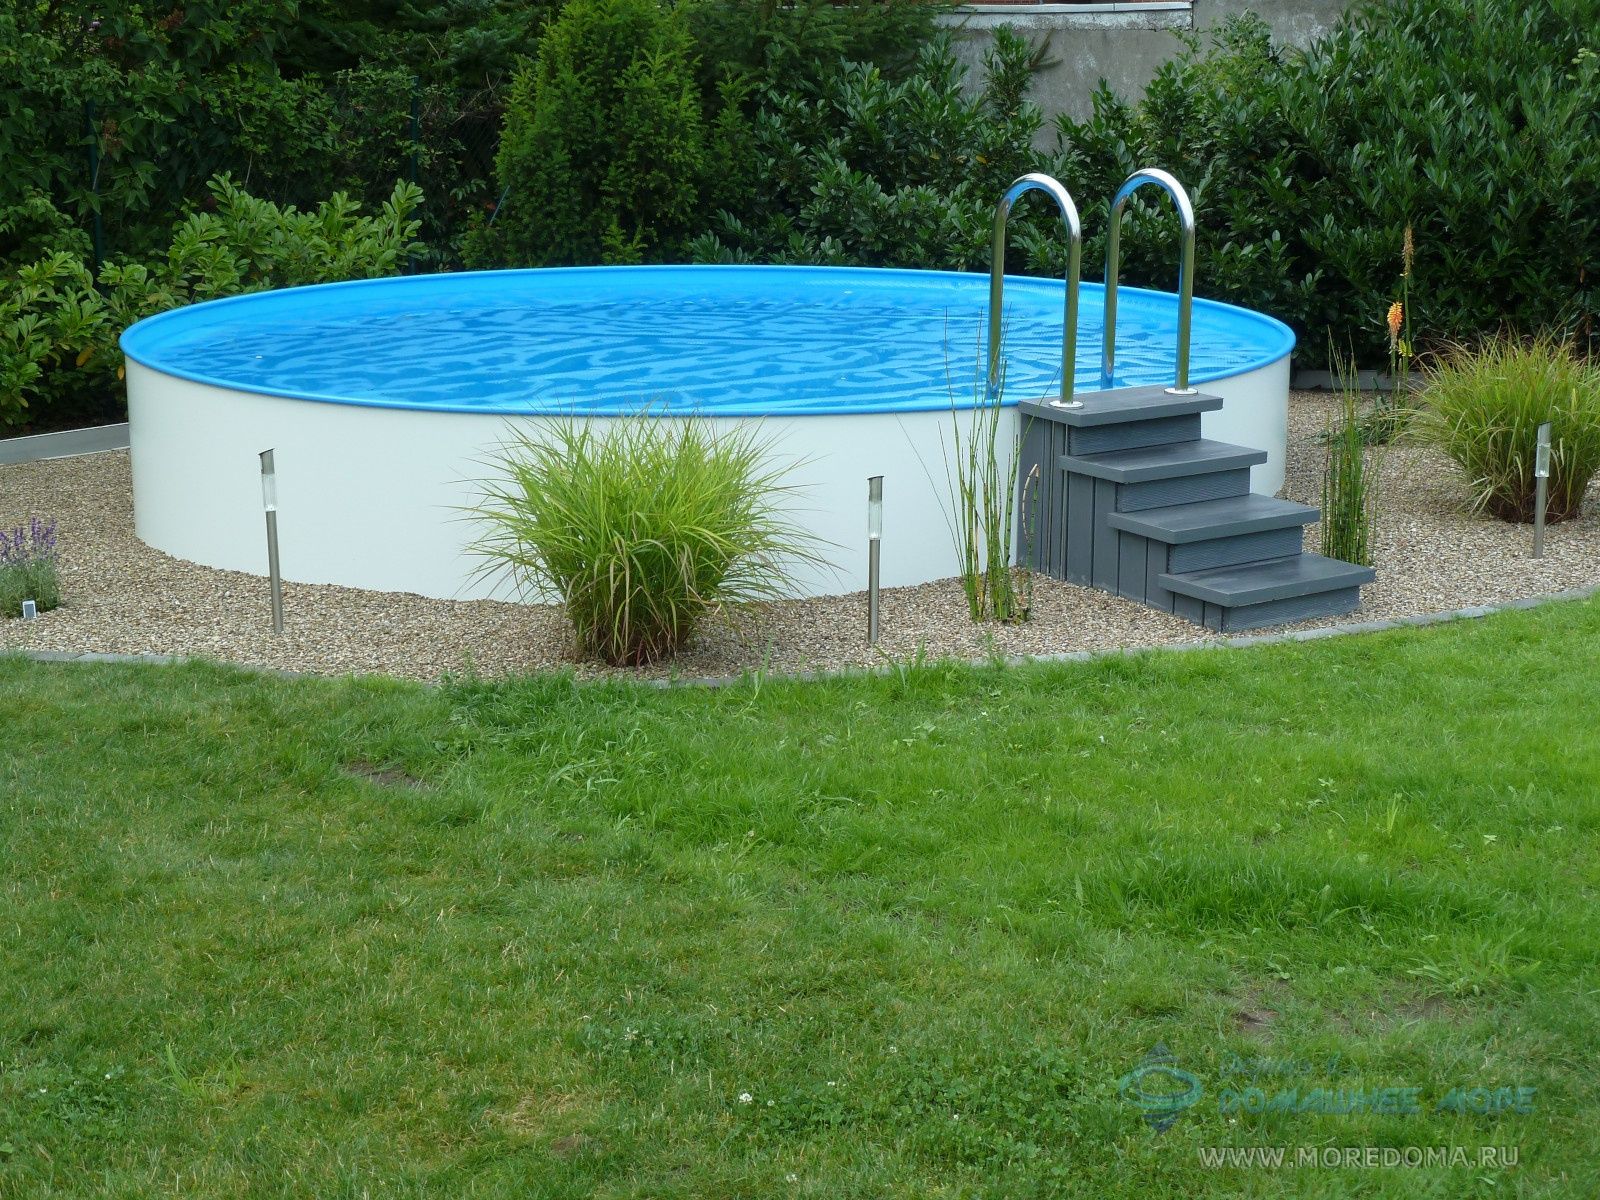 501010171-KB Каркасный бассейн Summer Fun (круг) 4,0 х 1,5м, арт. 501010171-KB диаметр 4.0 высота 1.5  